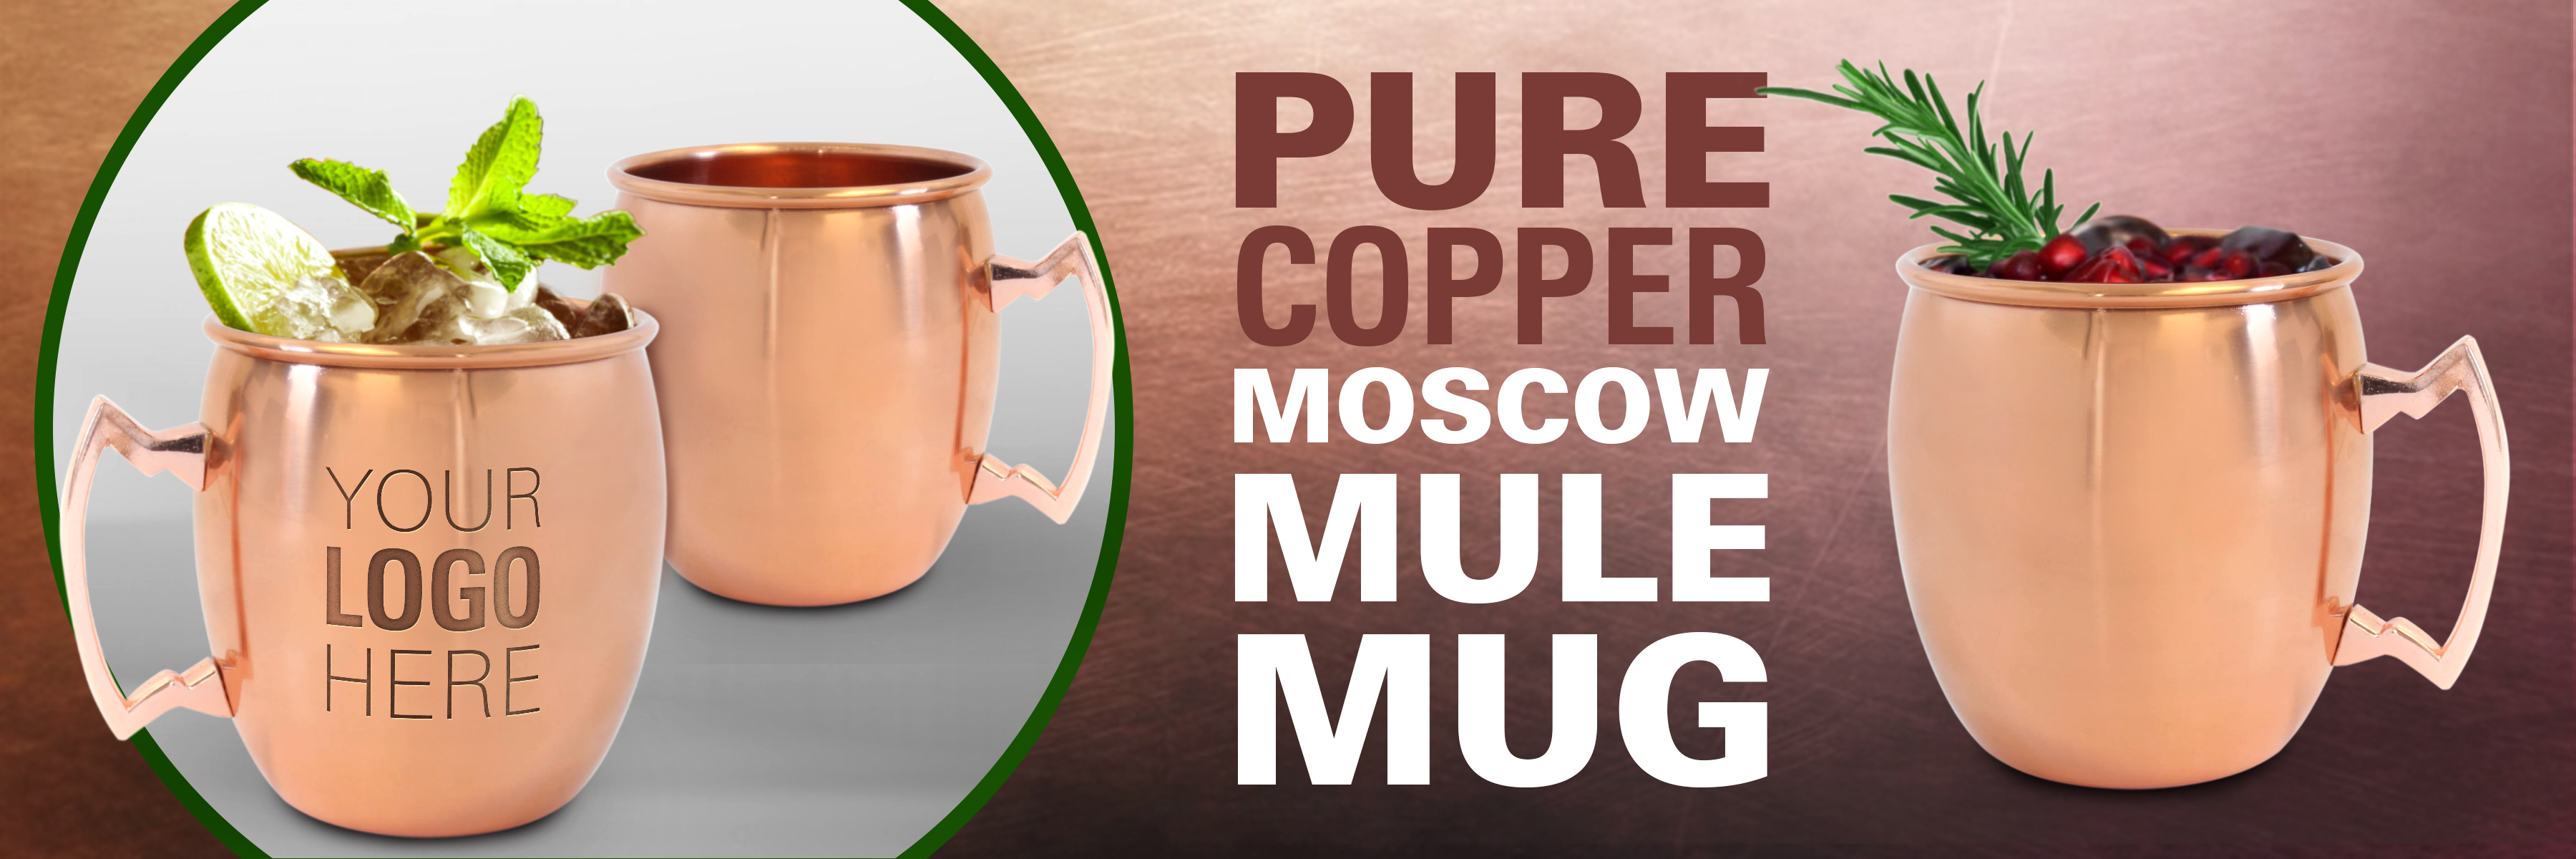 pure copper moscow mule mug